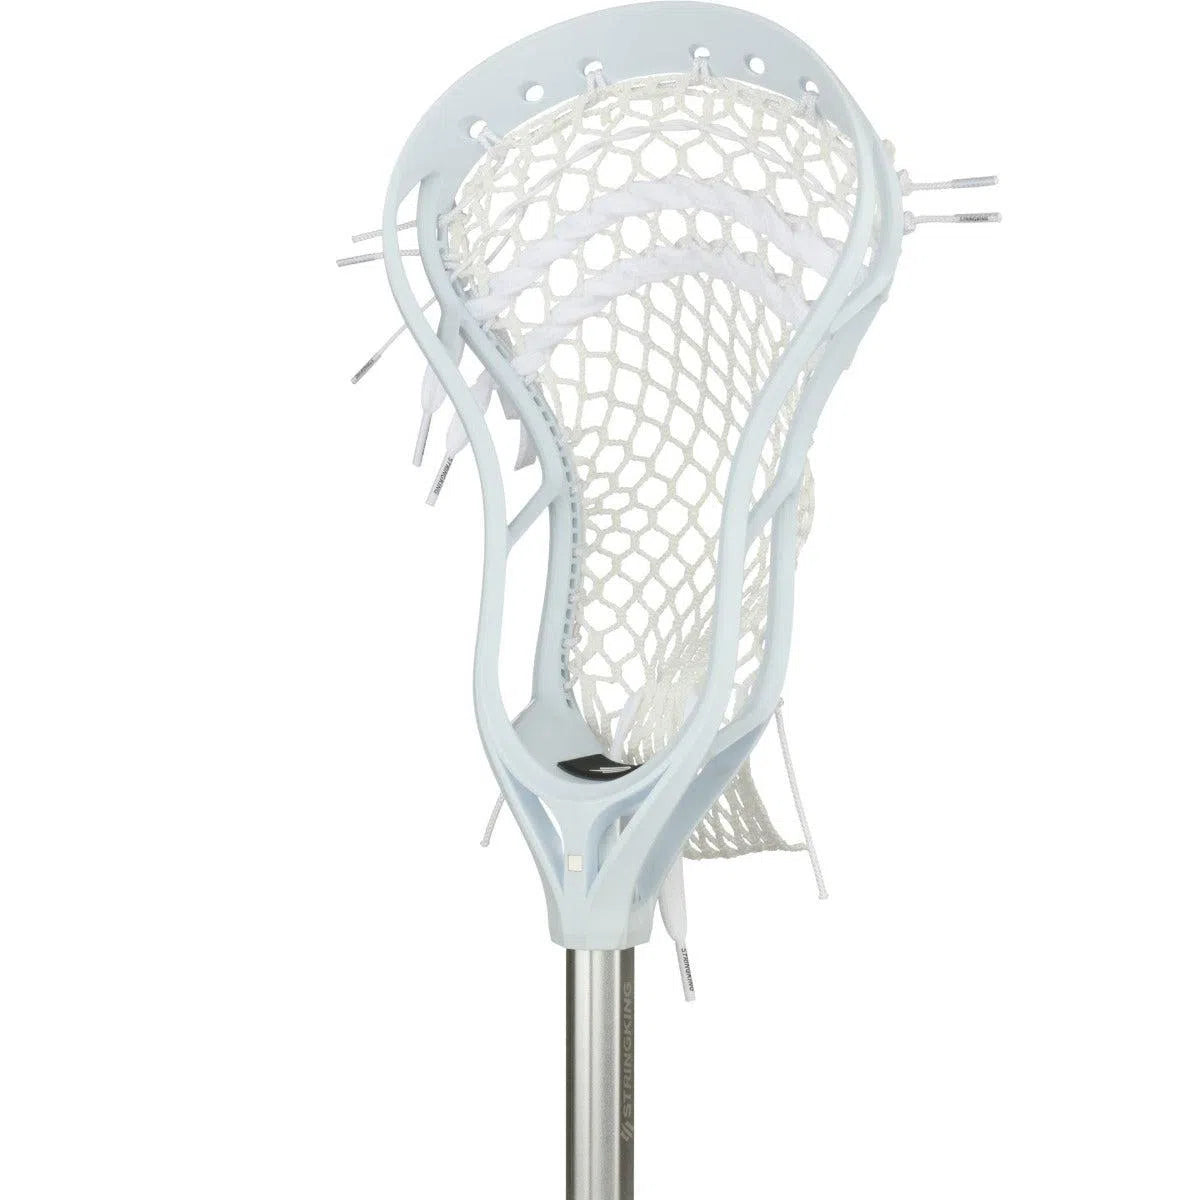 StringKing Complete 2 Junior Lacrosse Stick